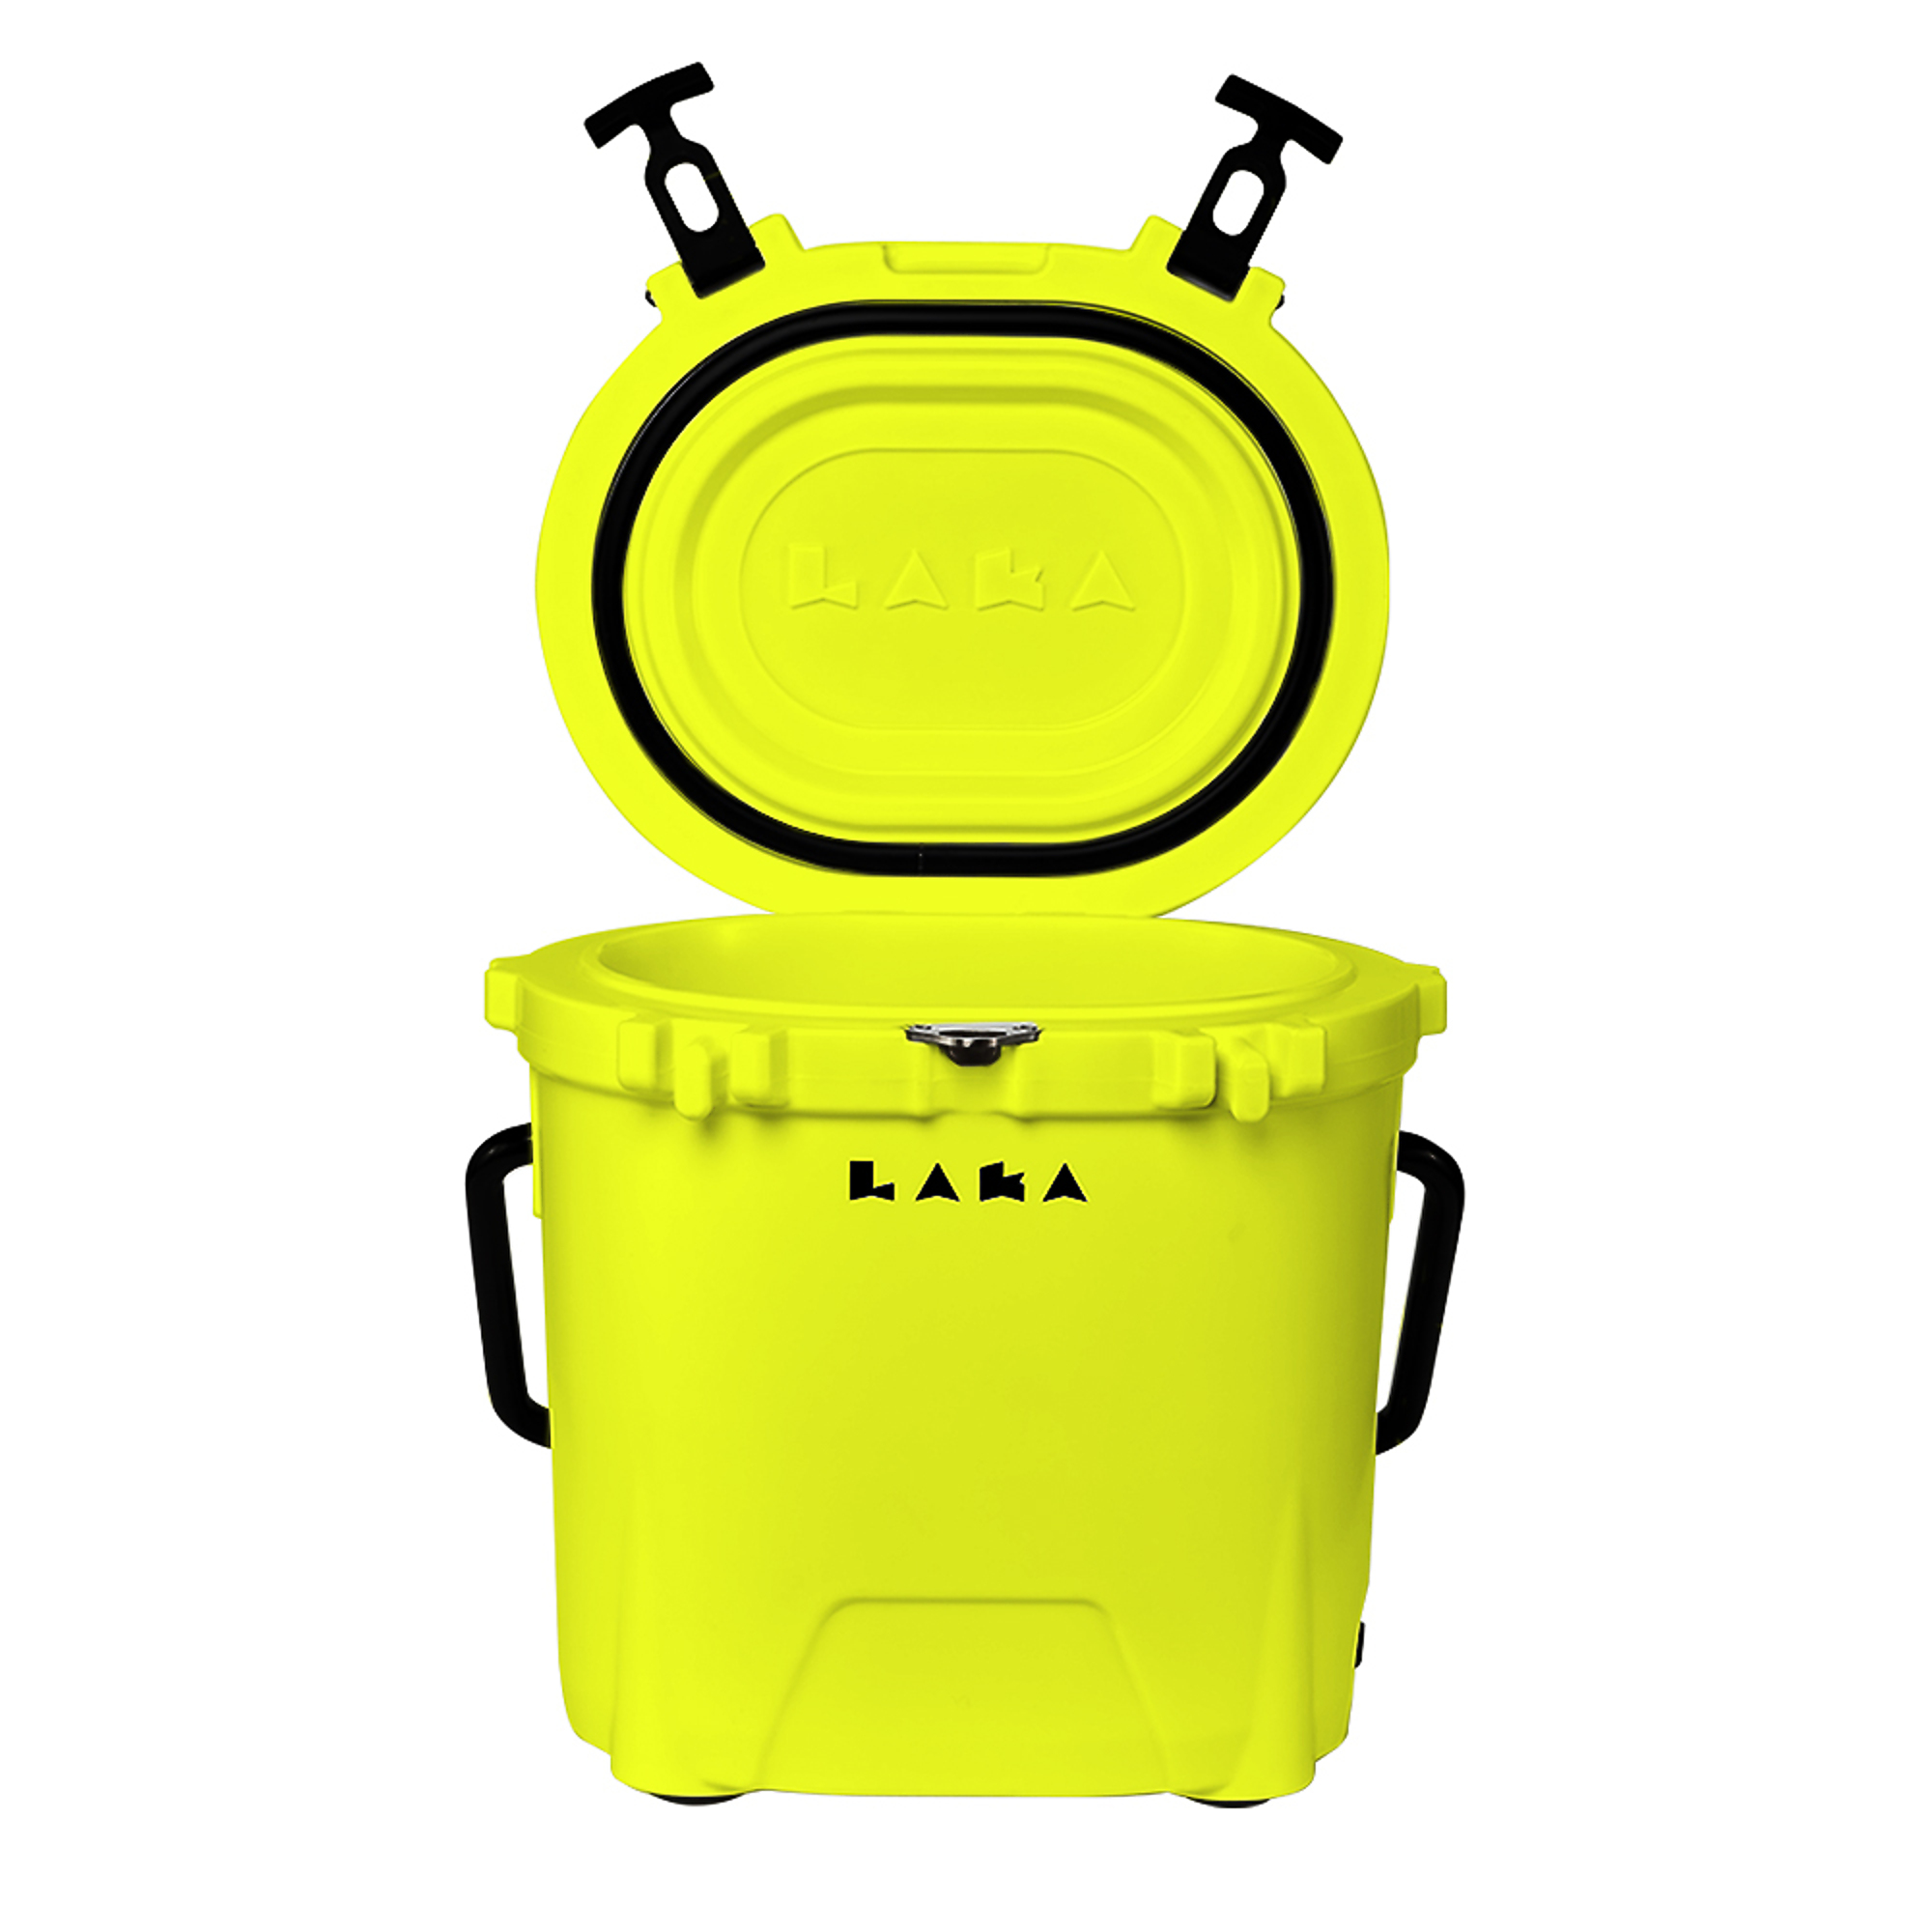 LAKA Cooler, 20 Quart Cooler - Yellow, Capacity 5 Gal, Model 1063